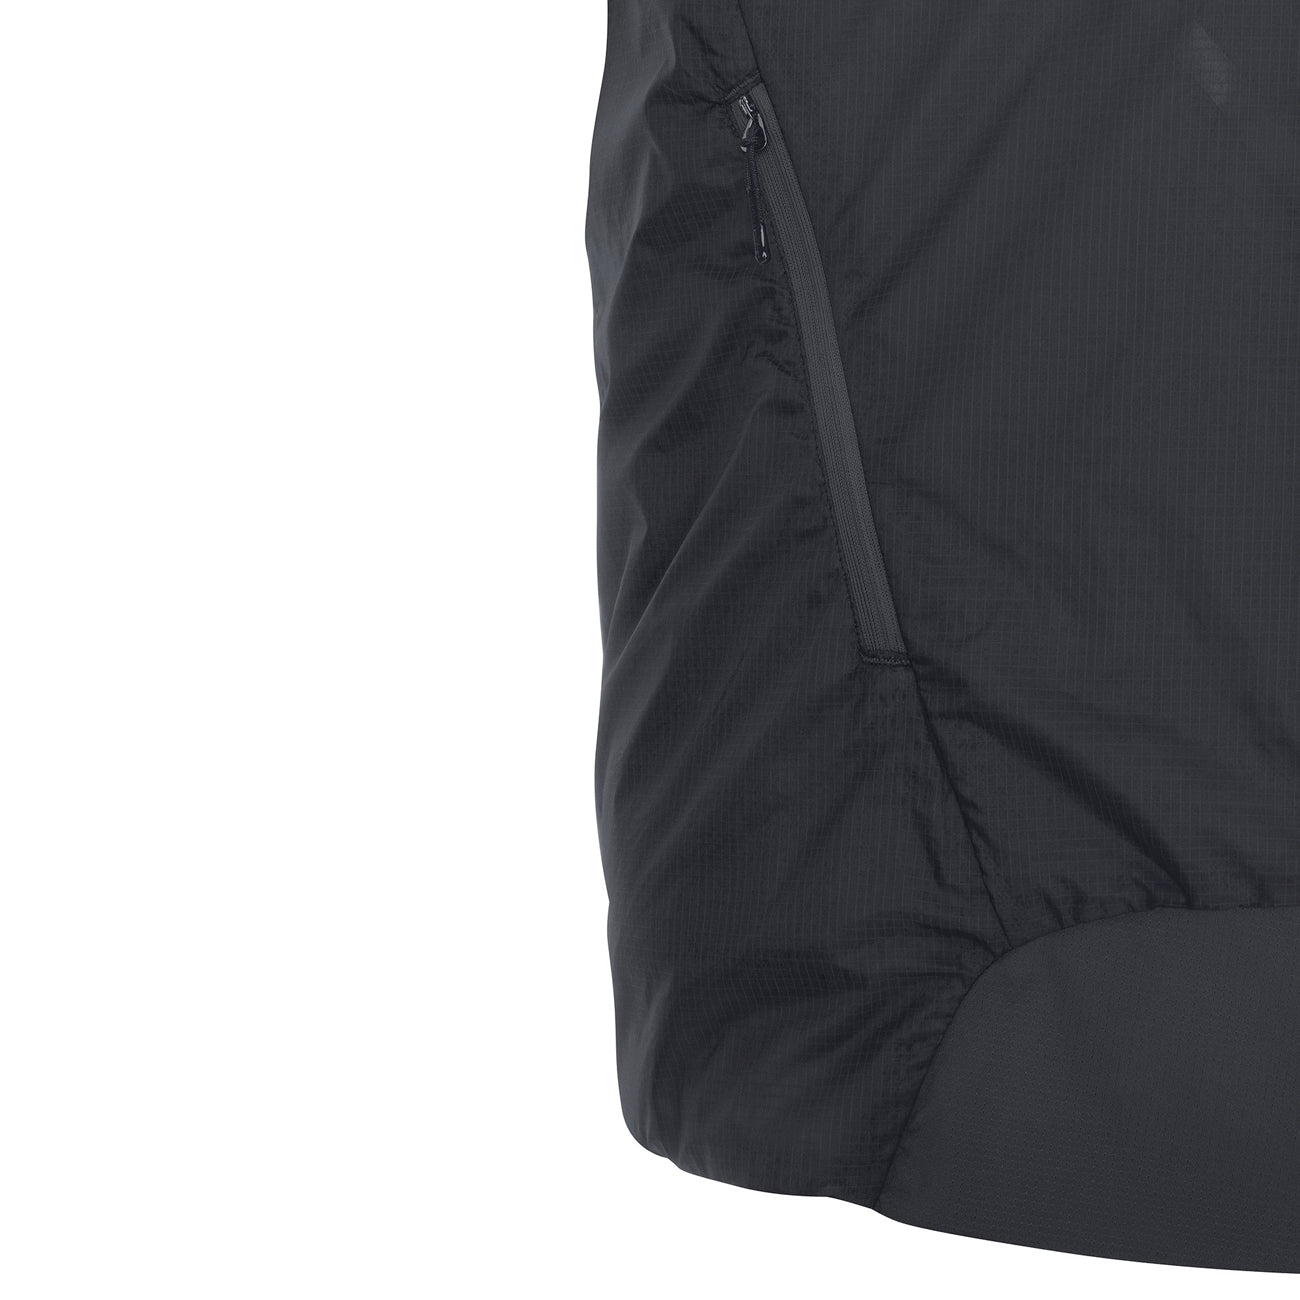 Gore Wear R5 Womens GTX Infinium Insulated Jacket Damen Black